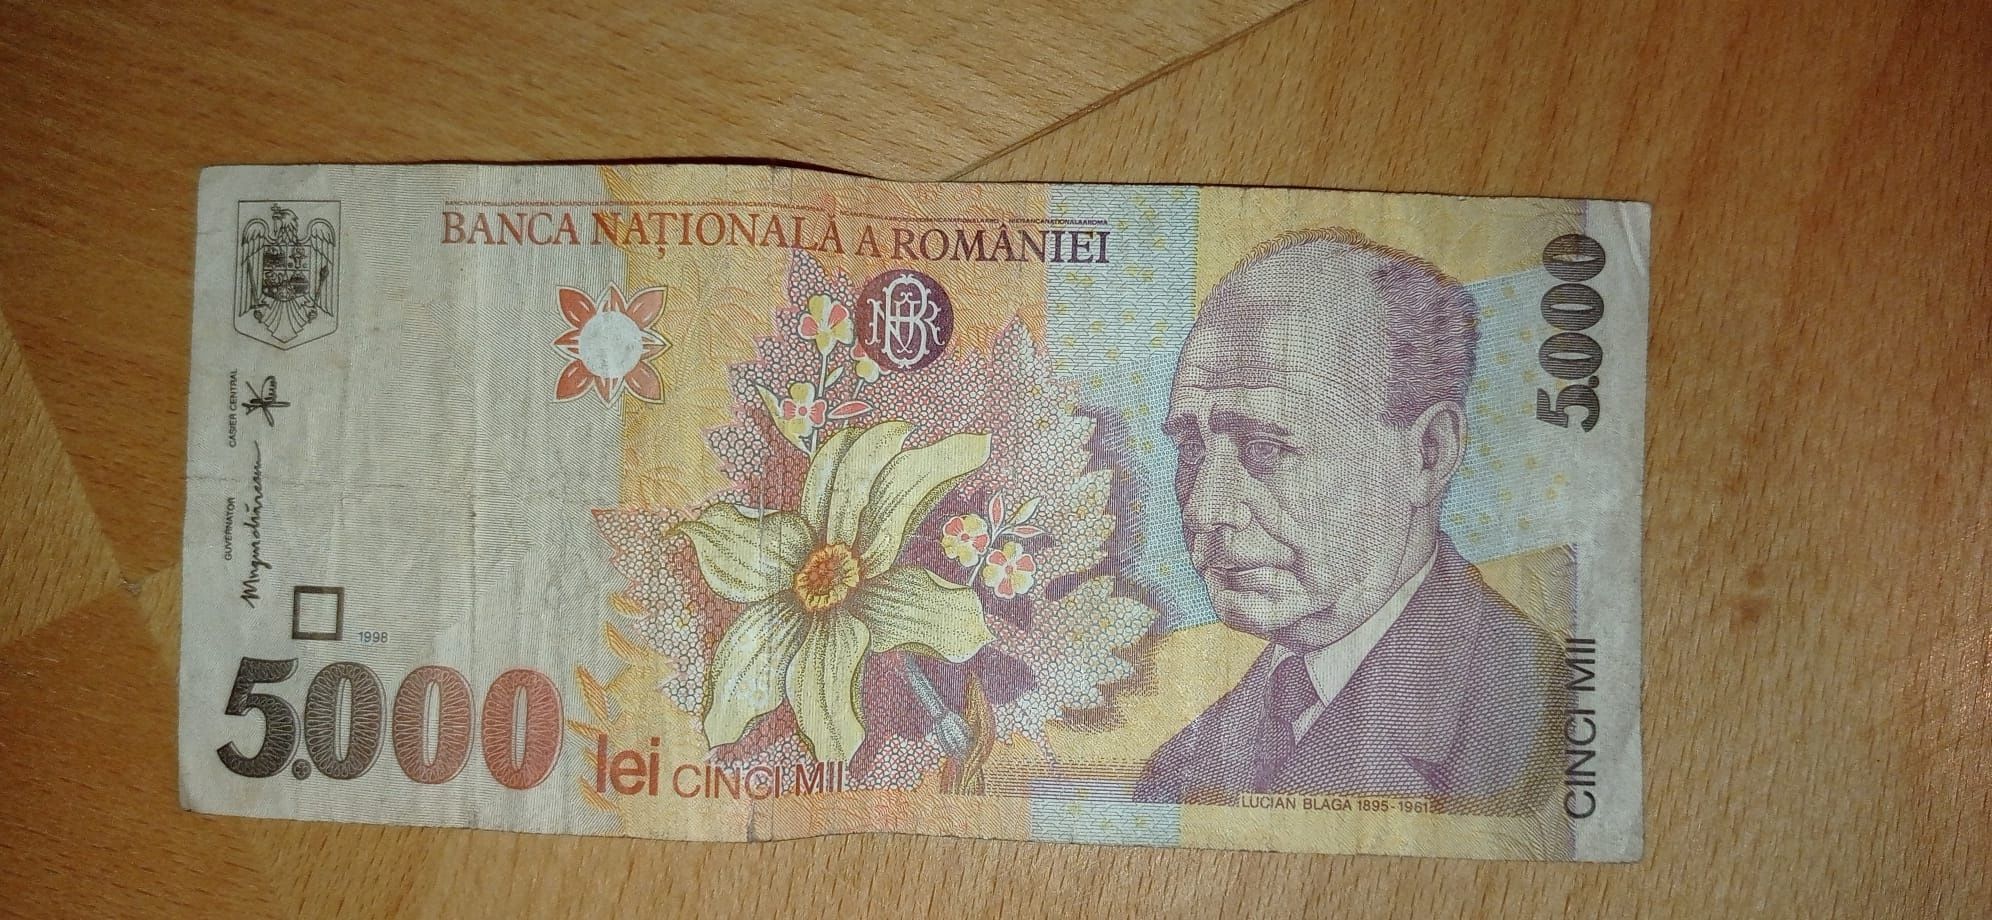 Bancnota 5000 lei Blaga 1998 seria 005A